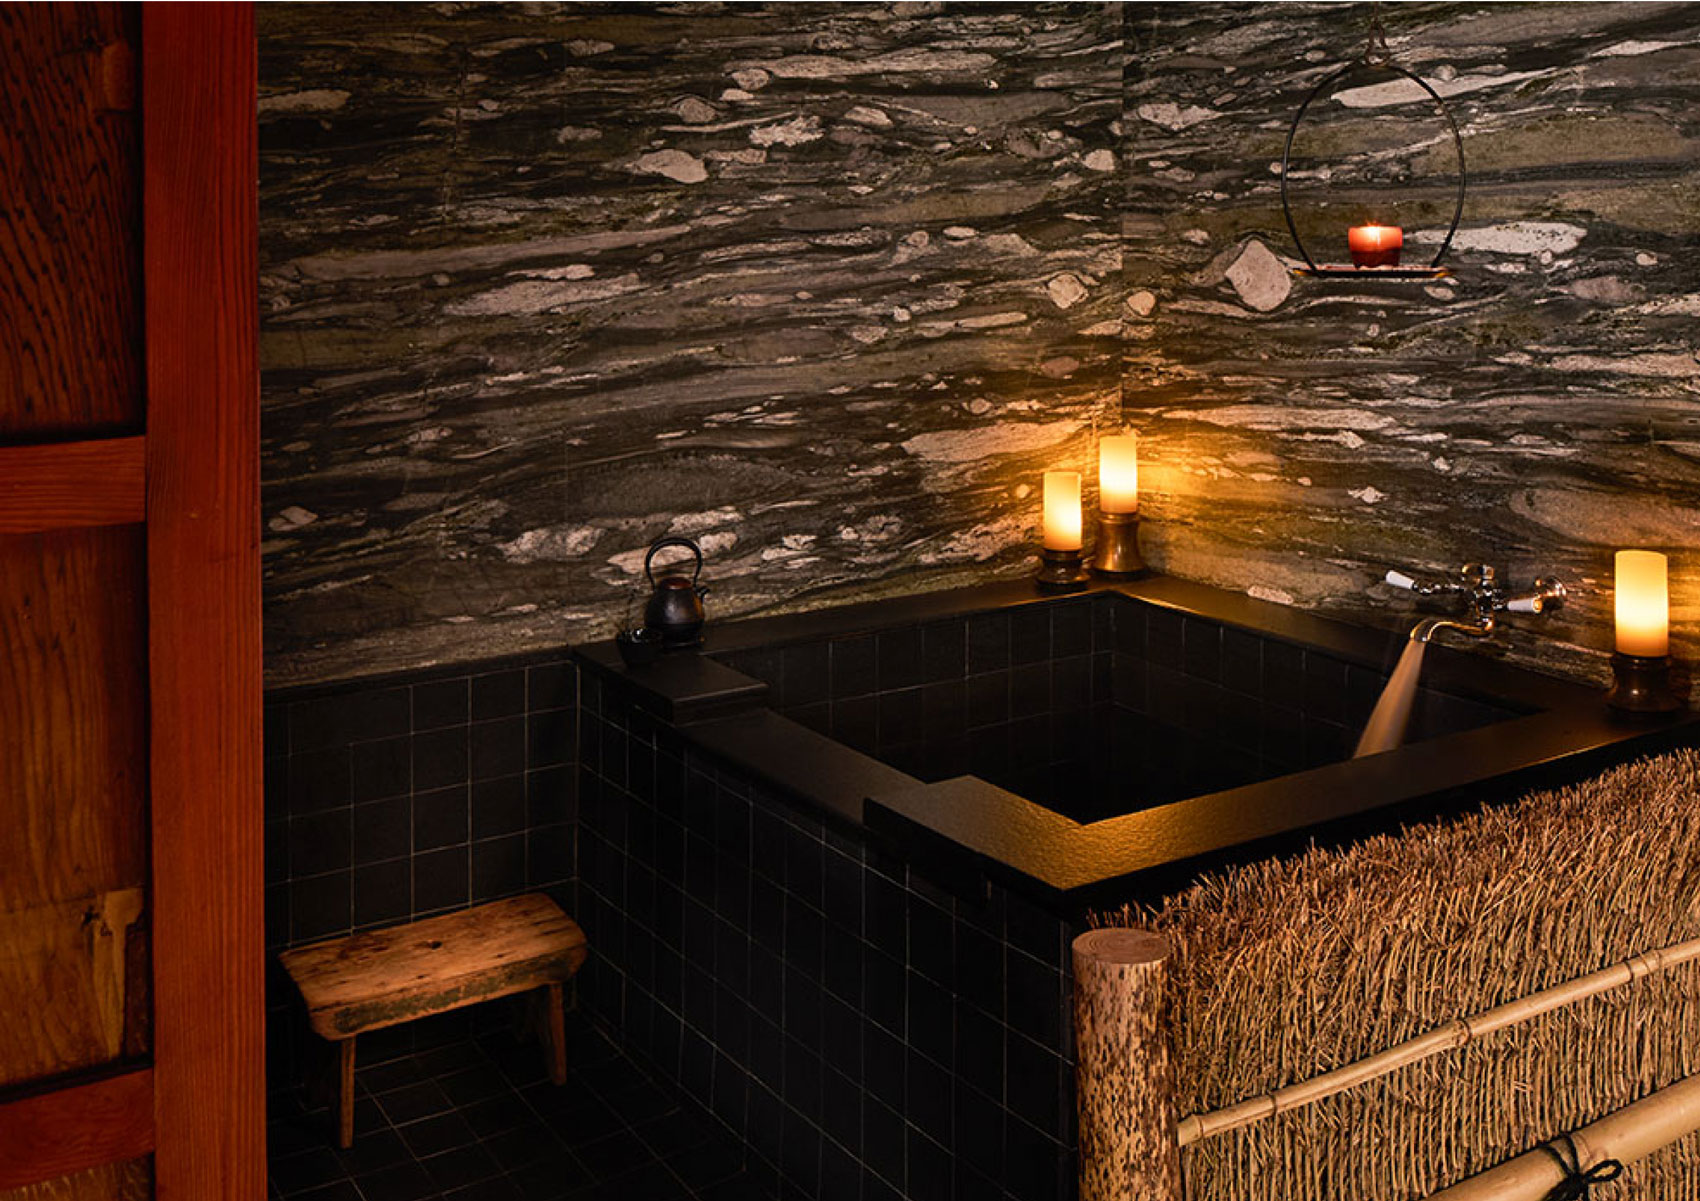 Private onsen bath room inside the Shibui Spa